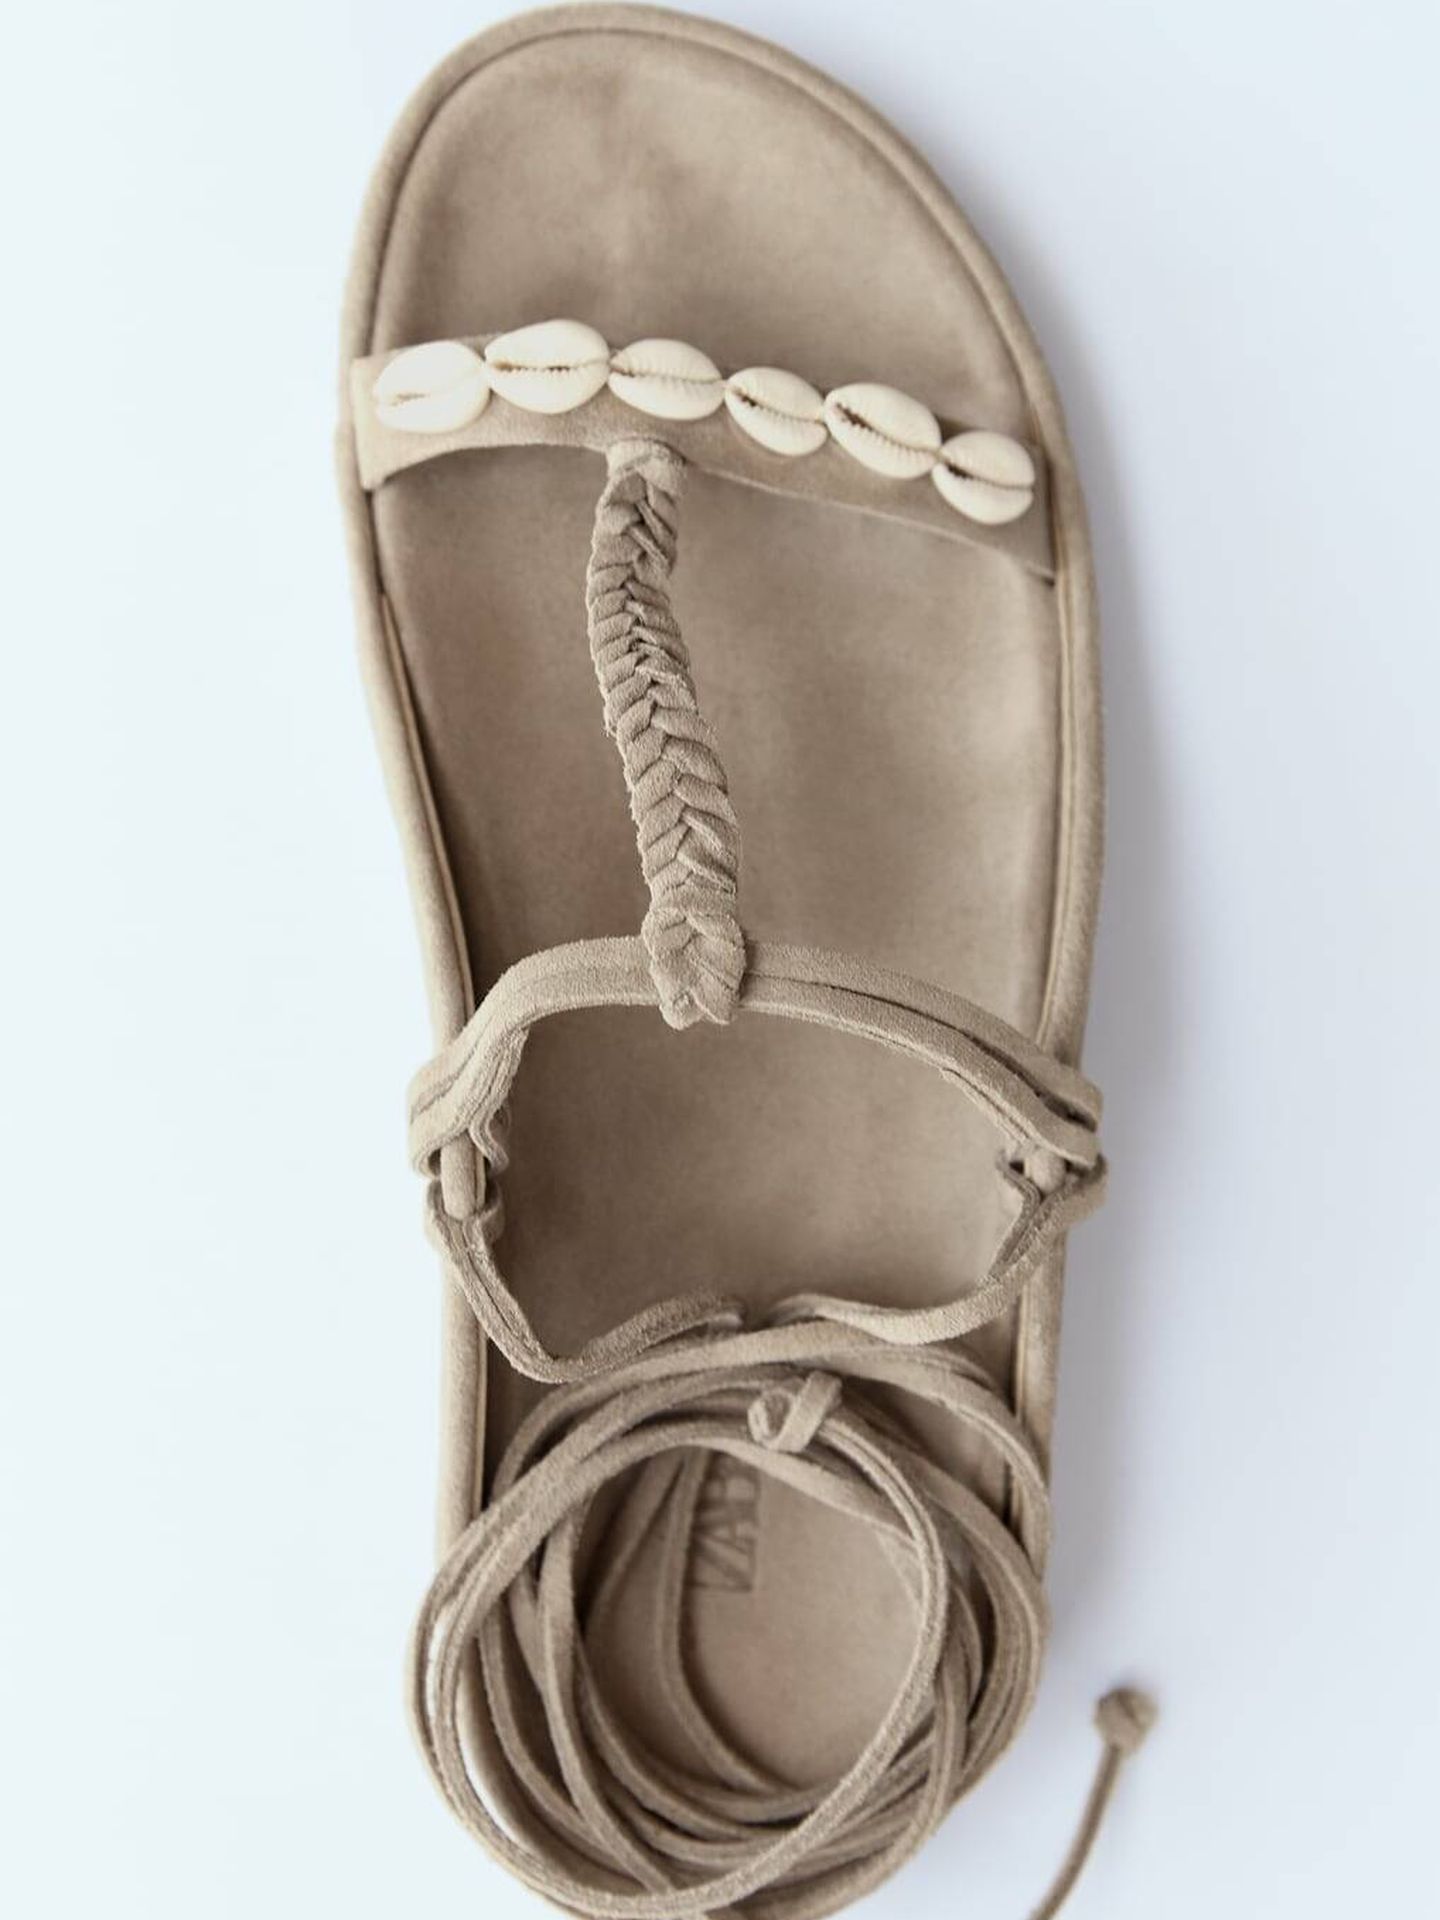 Sandalias de Zara con conchas marinas. (Cortesía)